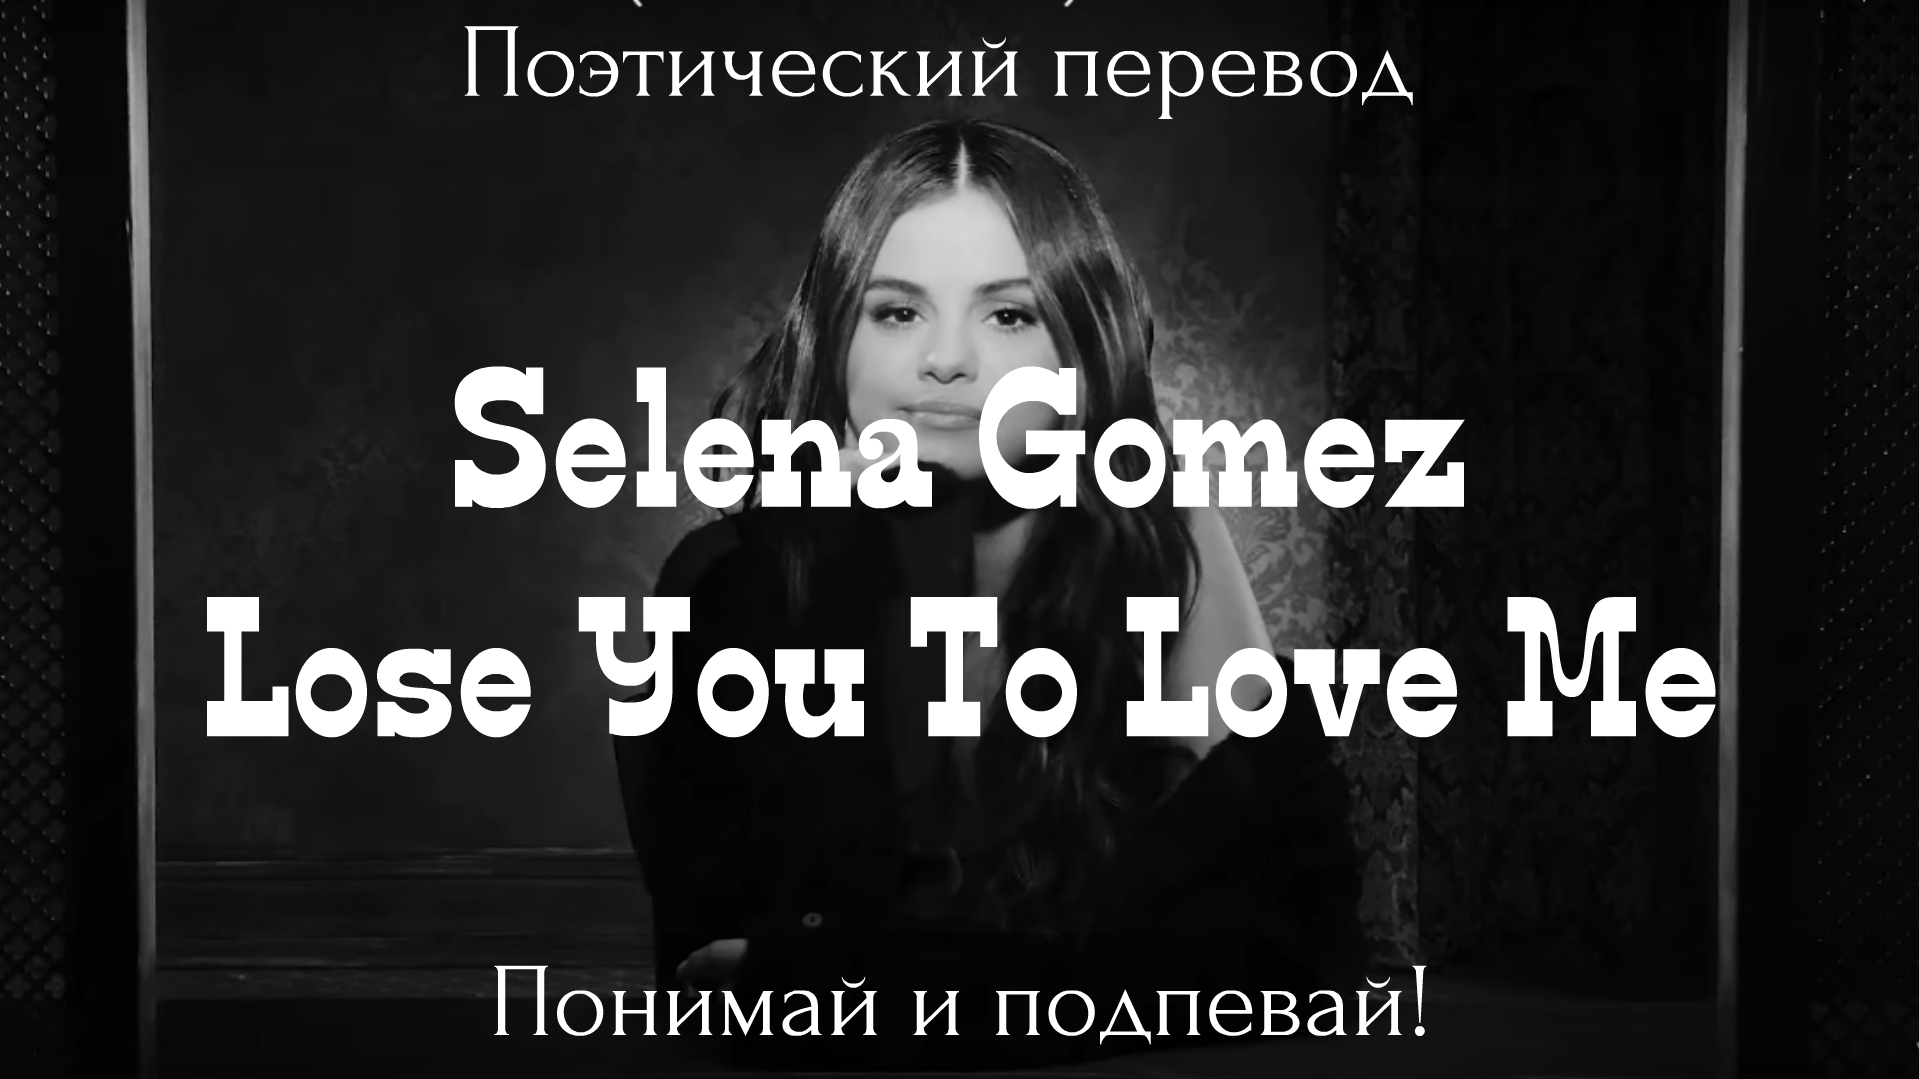 Losing you перевод песни на русский. Lose you to Love me selena Gomez перевод. Lose you to Love me. Перевод песни selena Gomez Love you to Love me. Selena Gomez lose your to Love me текст.